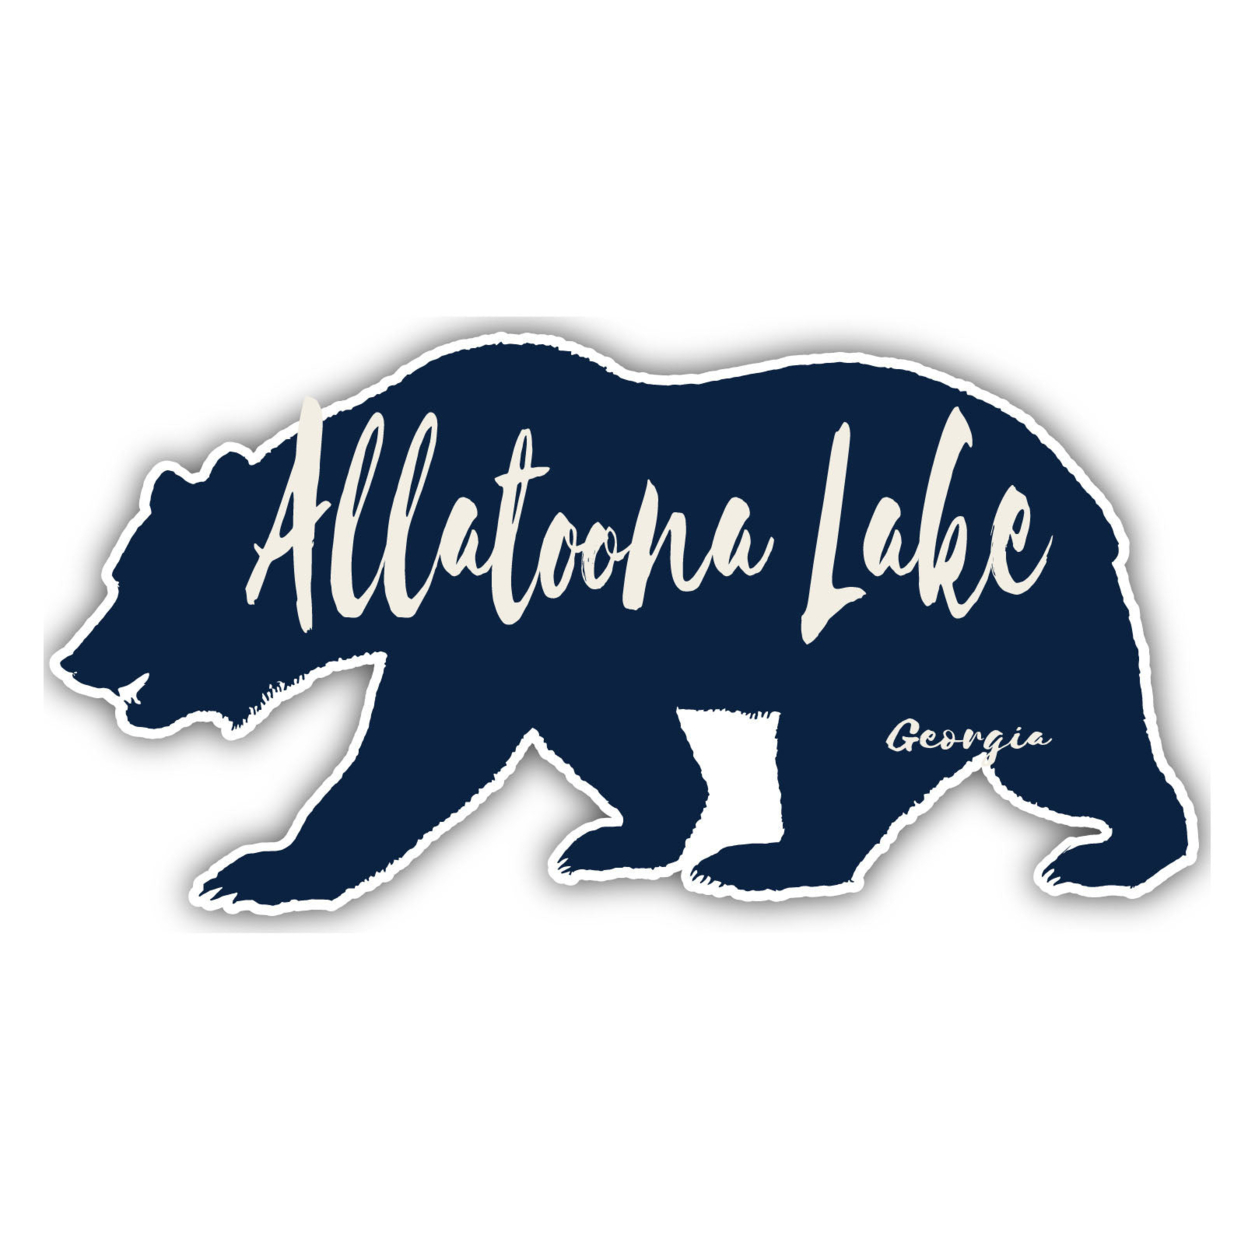 Allatoona Lake Georgia Souvenir Decorative Stickers (Choose Theme And Size) - 4-Pack, 8-Inch, Tent